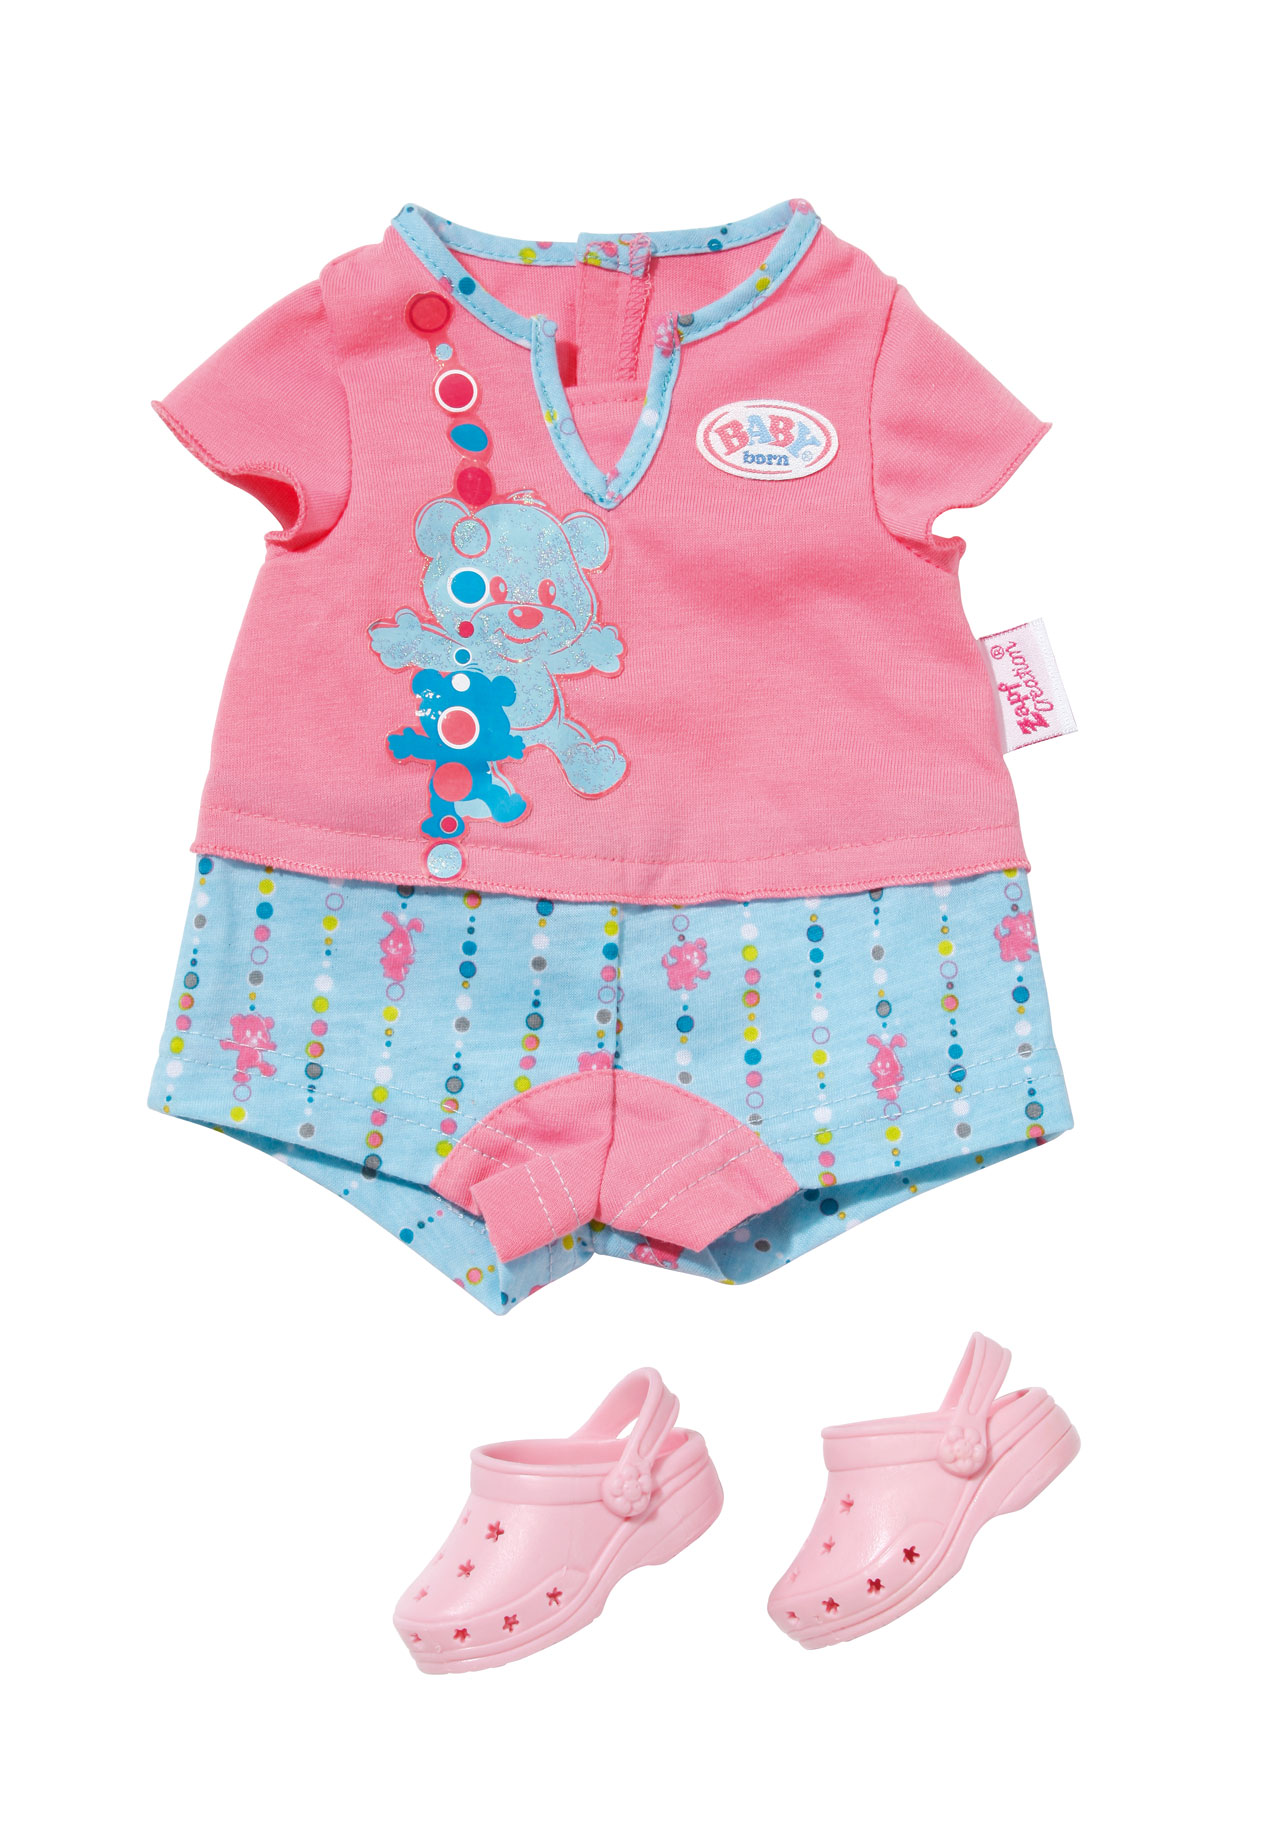 Baby Born Shorty Pyjamas With Shoes | Baby Born | Prima Toys